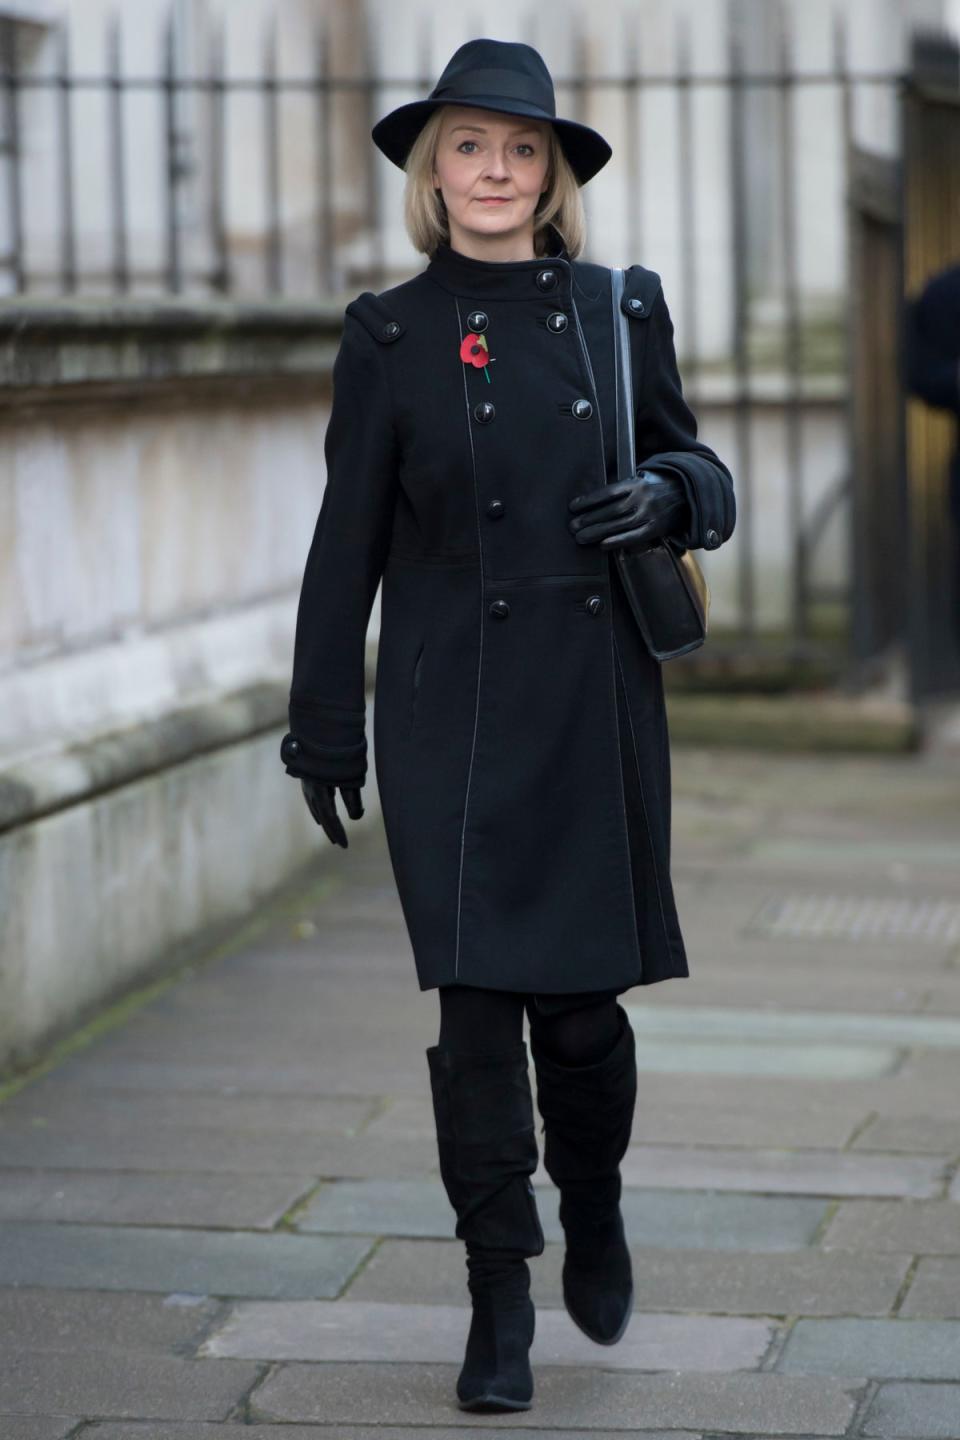 Then Justice Secretary Liz Truss walks through Downing Street, in 2016 (David Mirzoeff/PA)